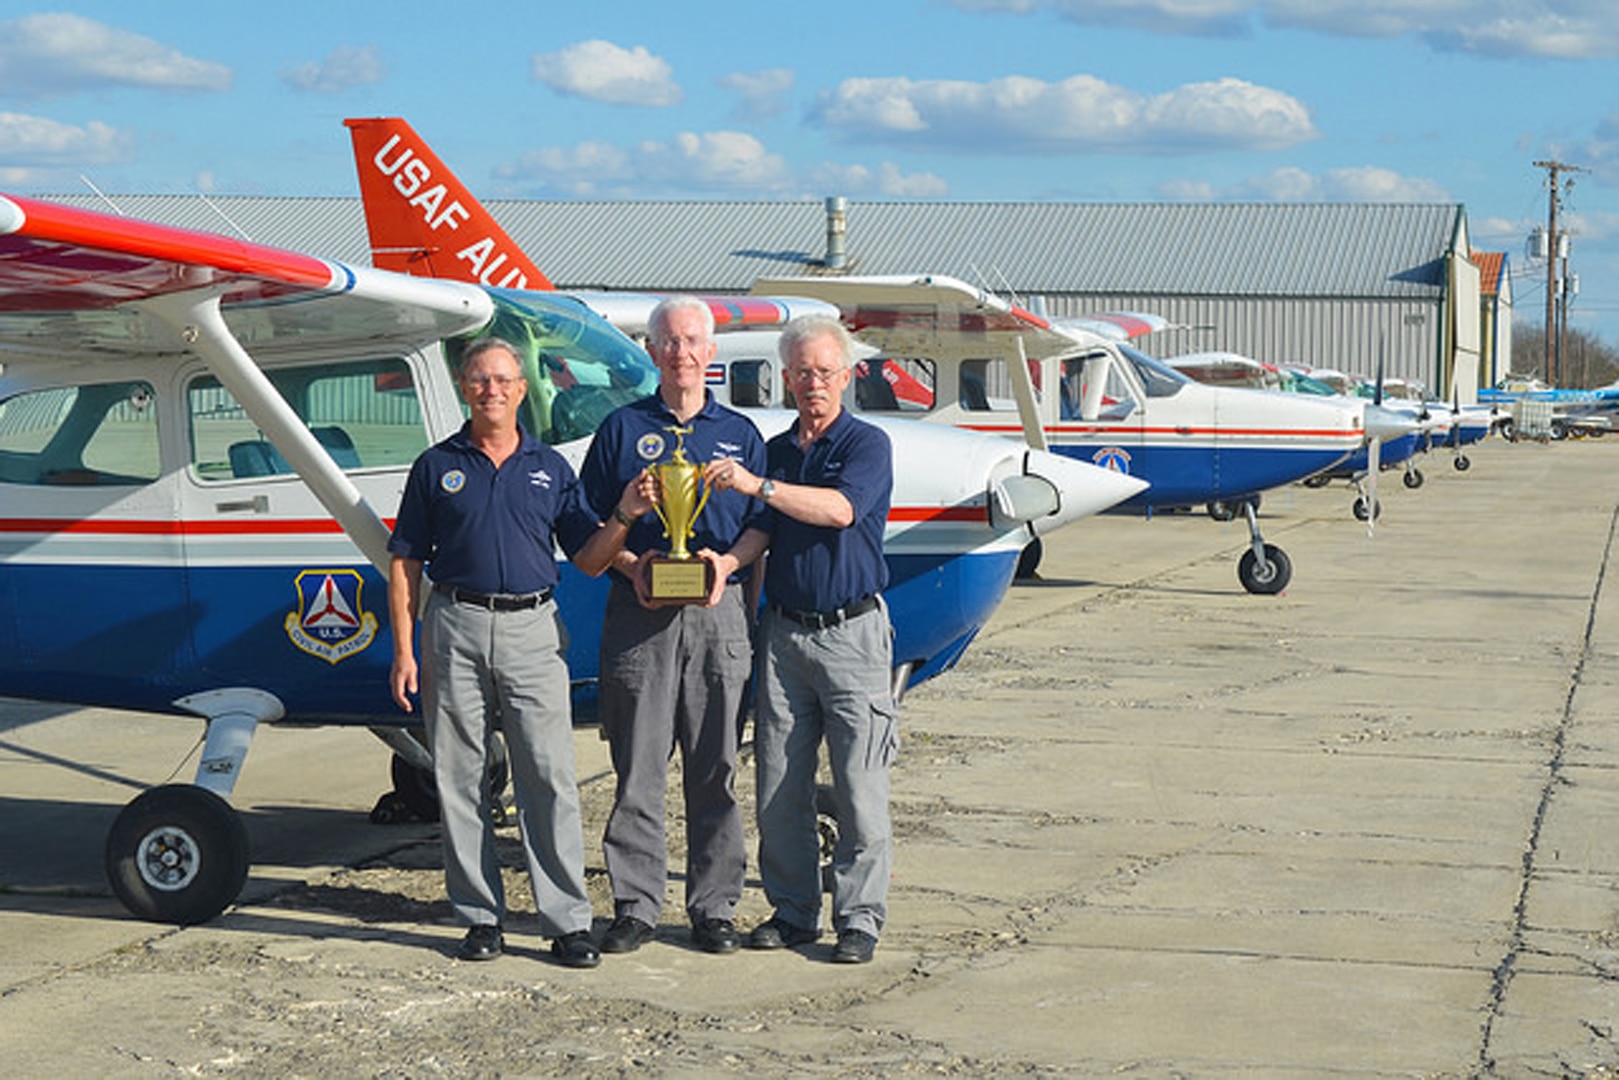 Occupational analysis chief’s team wins Civil Air Patrol flight event